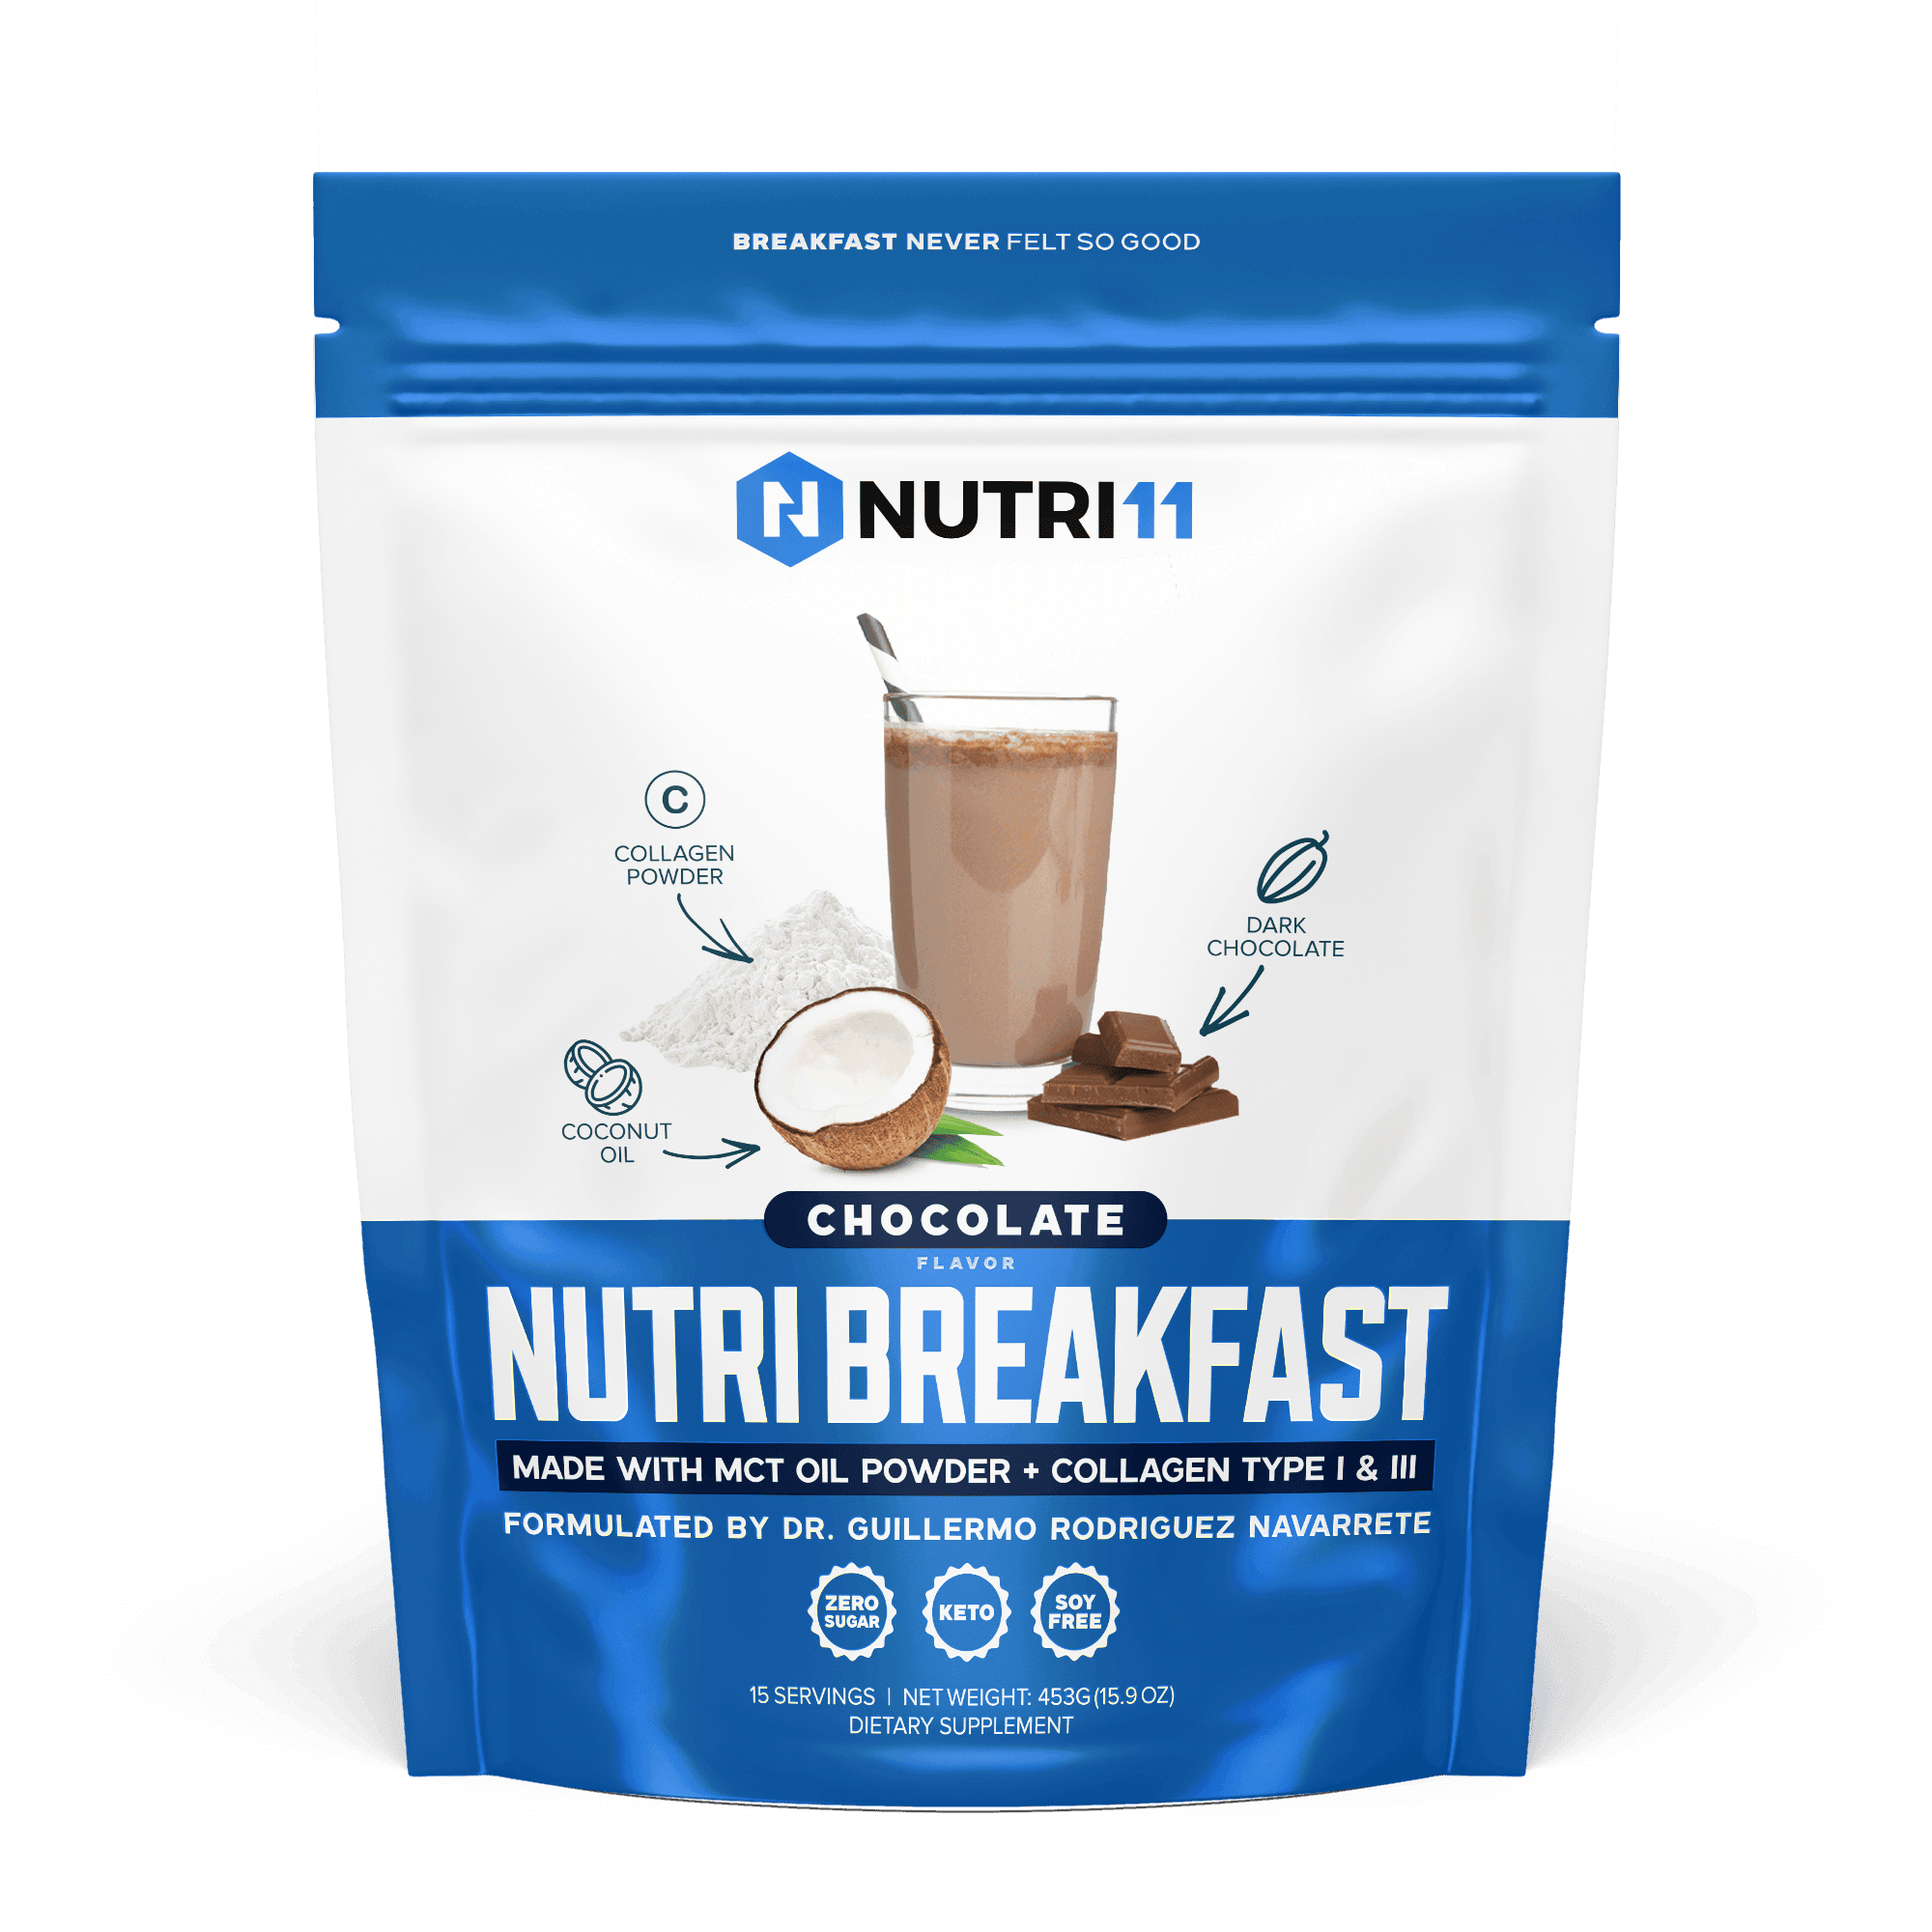 NutriBreakfast Chocolate - Nutri11